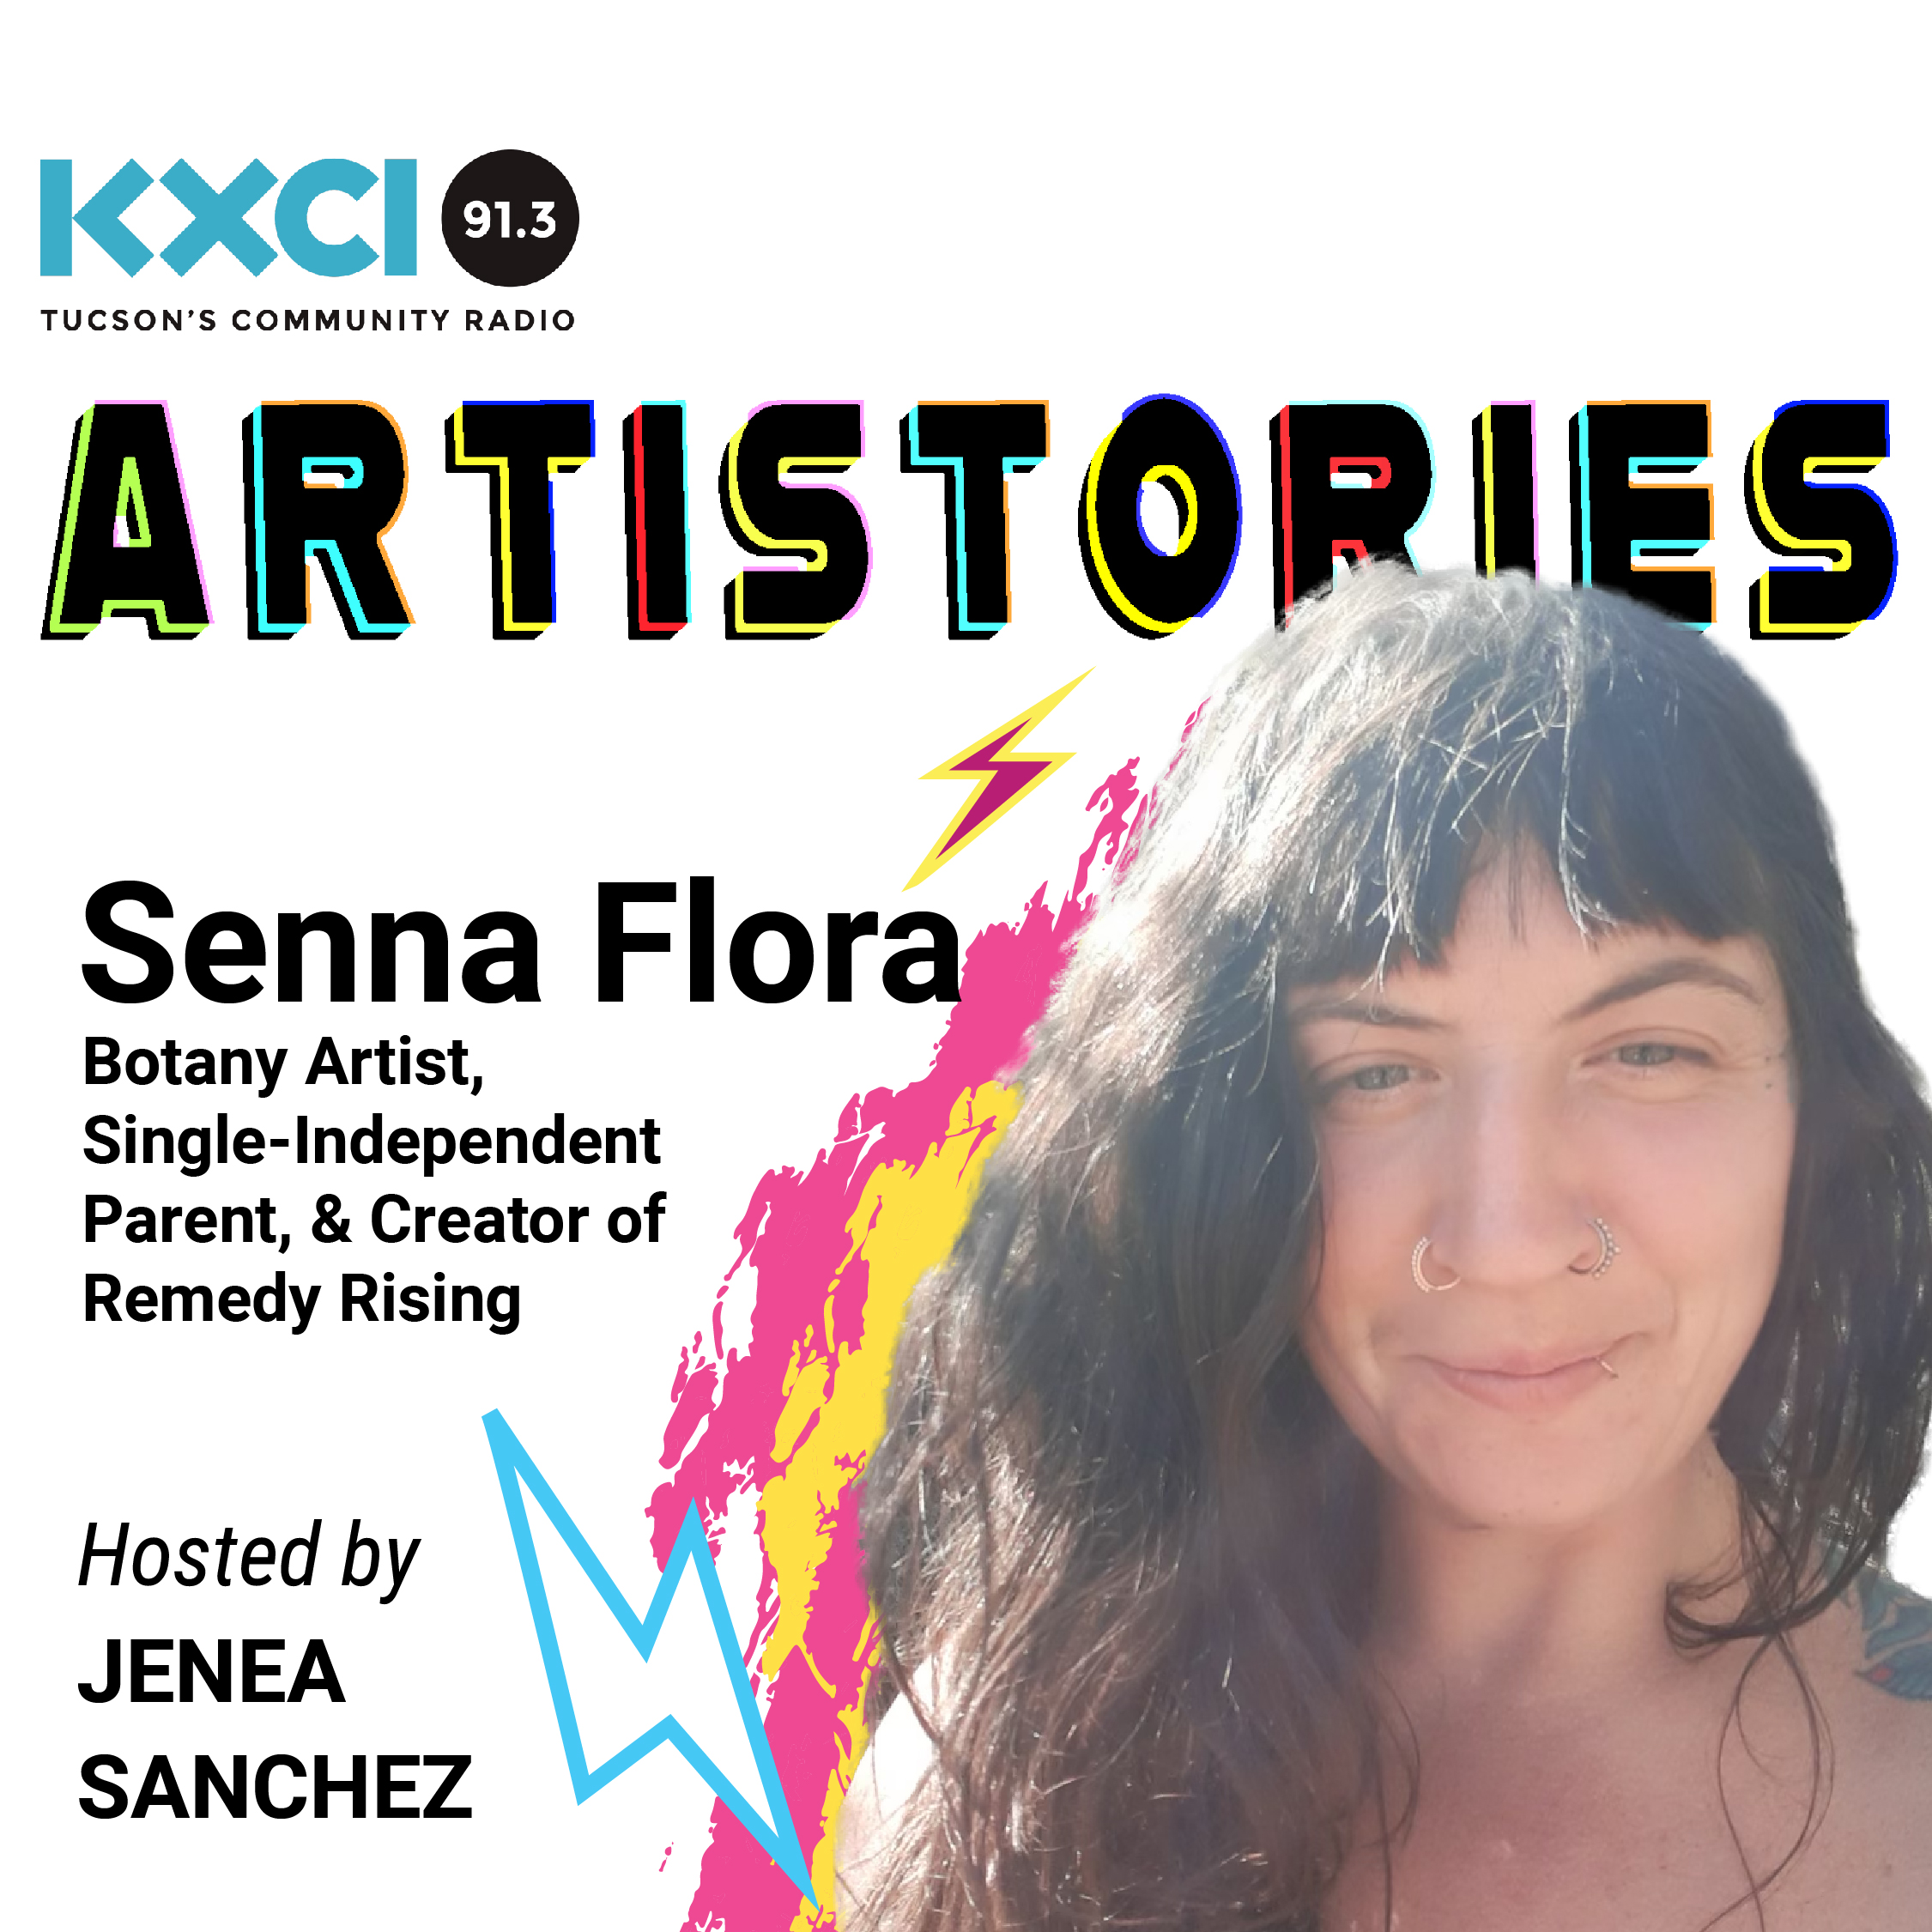 Senna Flora - Botany Artist, Single-Independent Parent, and Creator of Remedy Rising